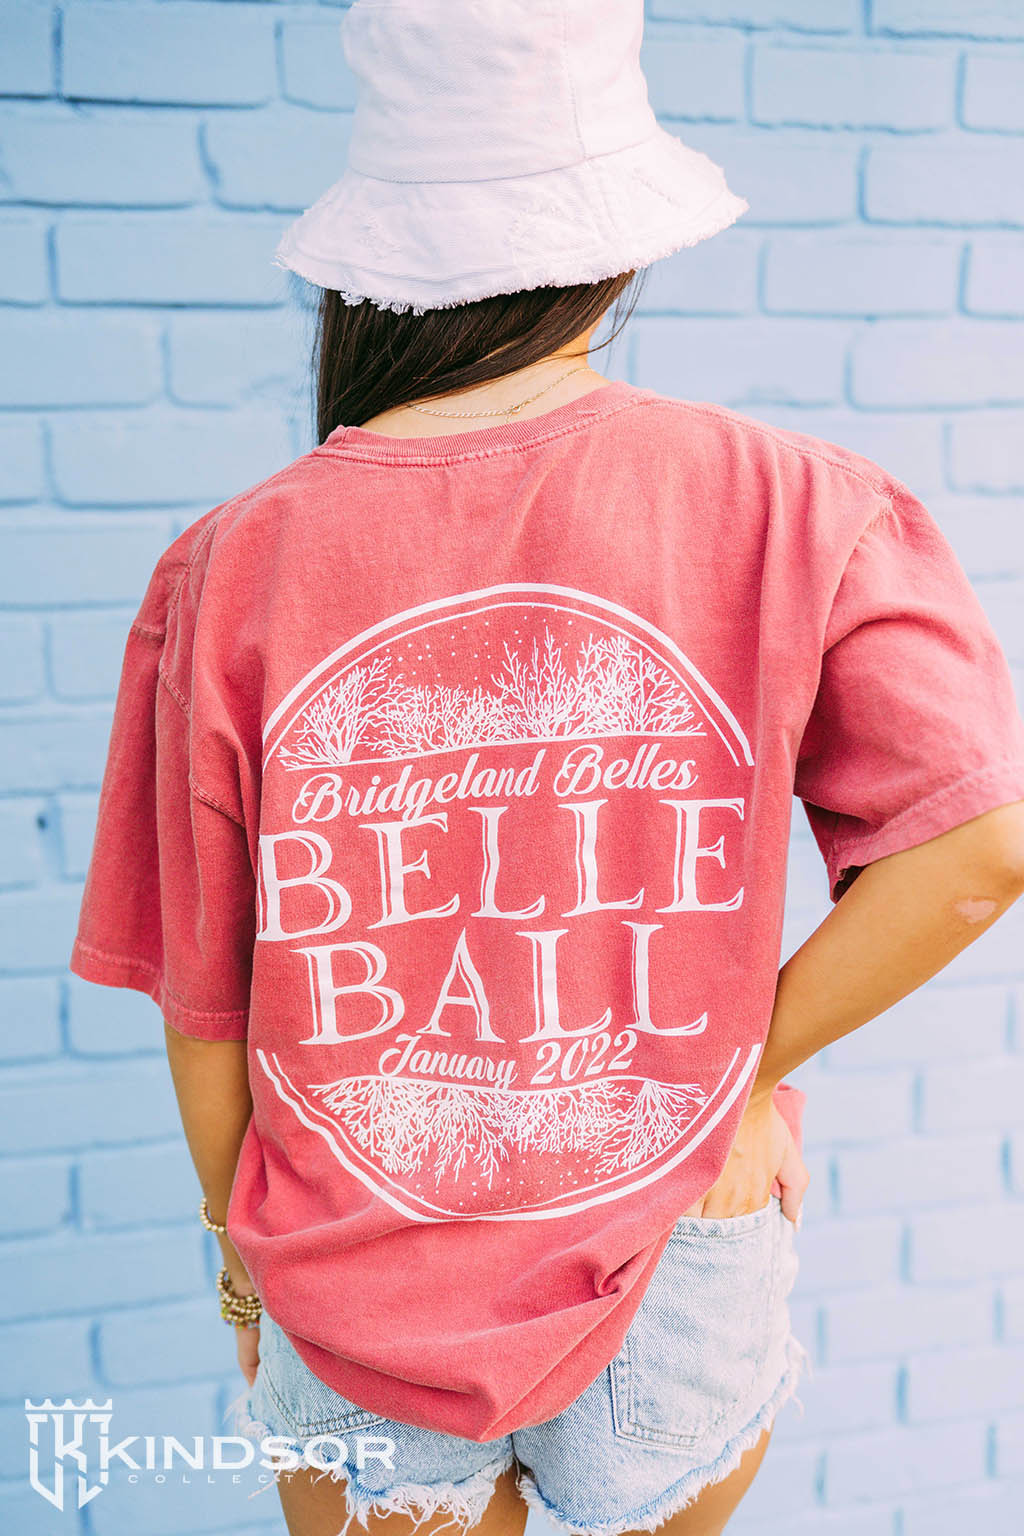 Bridgeland Belles Belle Ball Tshirt